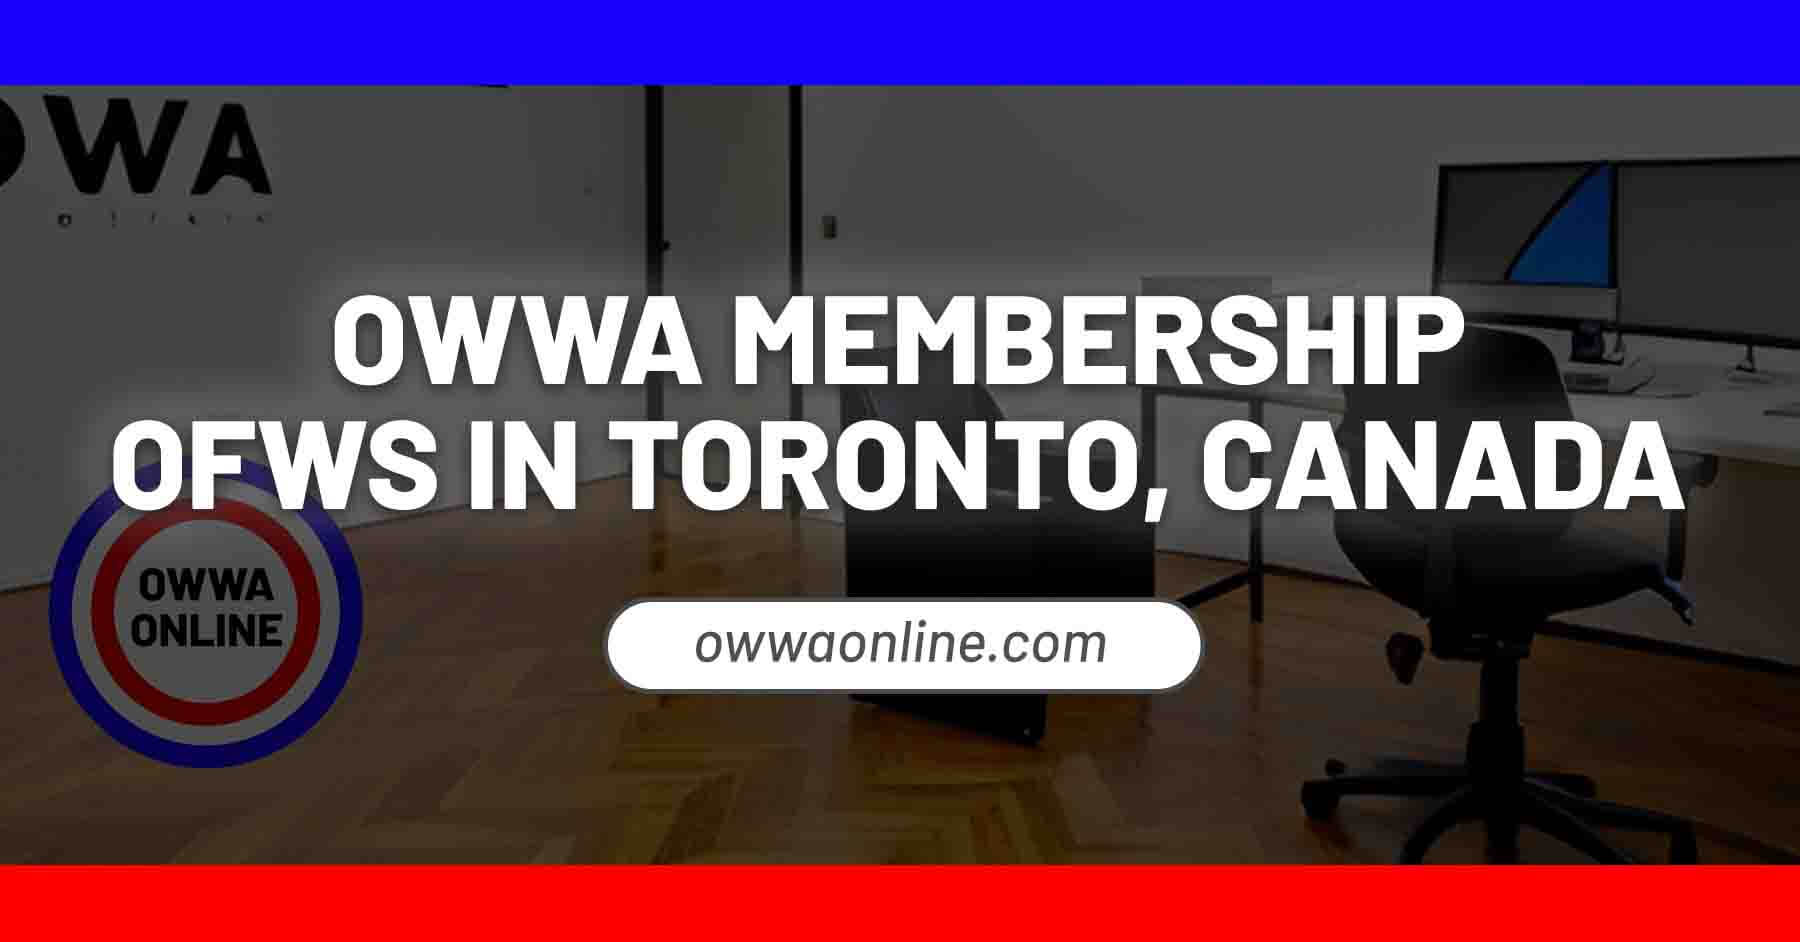 owwa appointment toronto canada renewal application